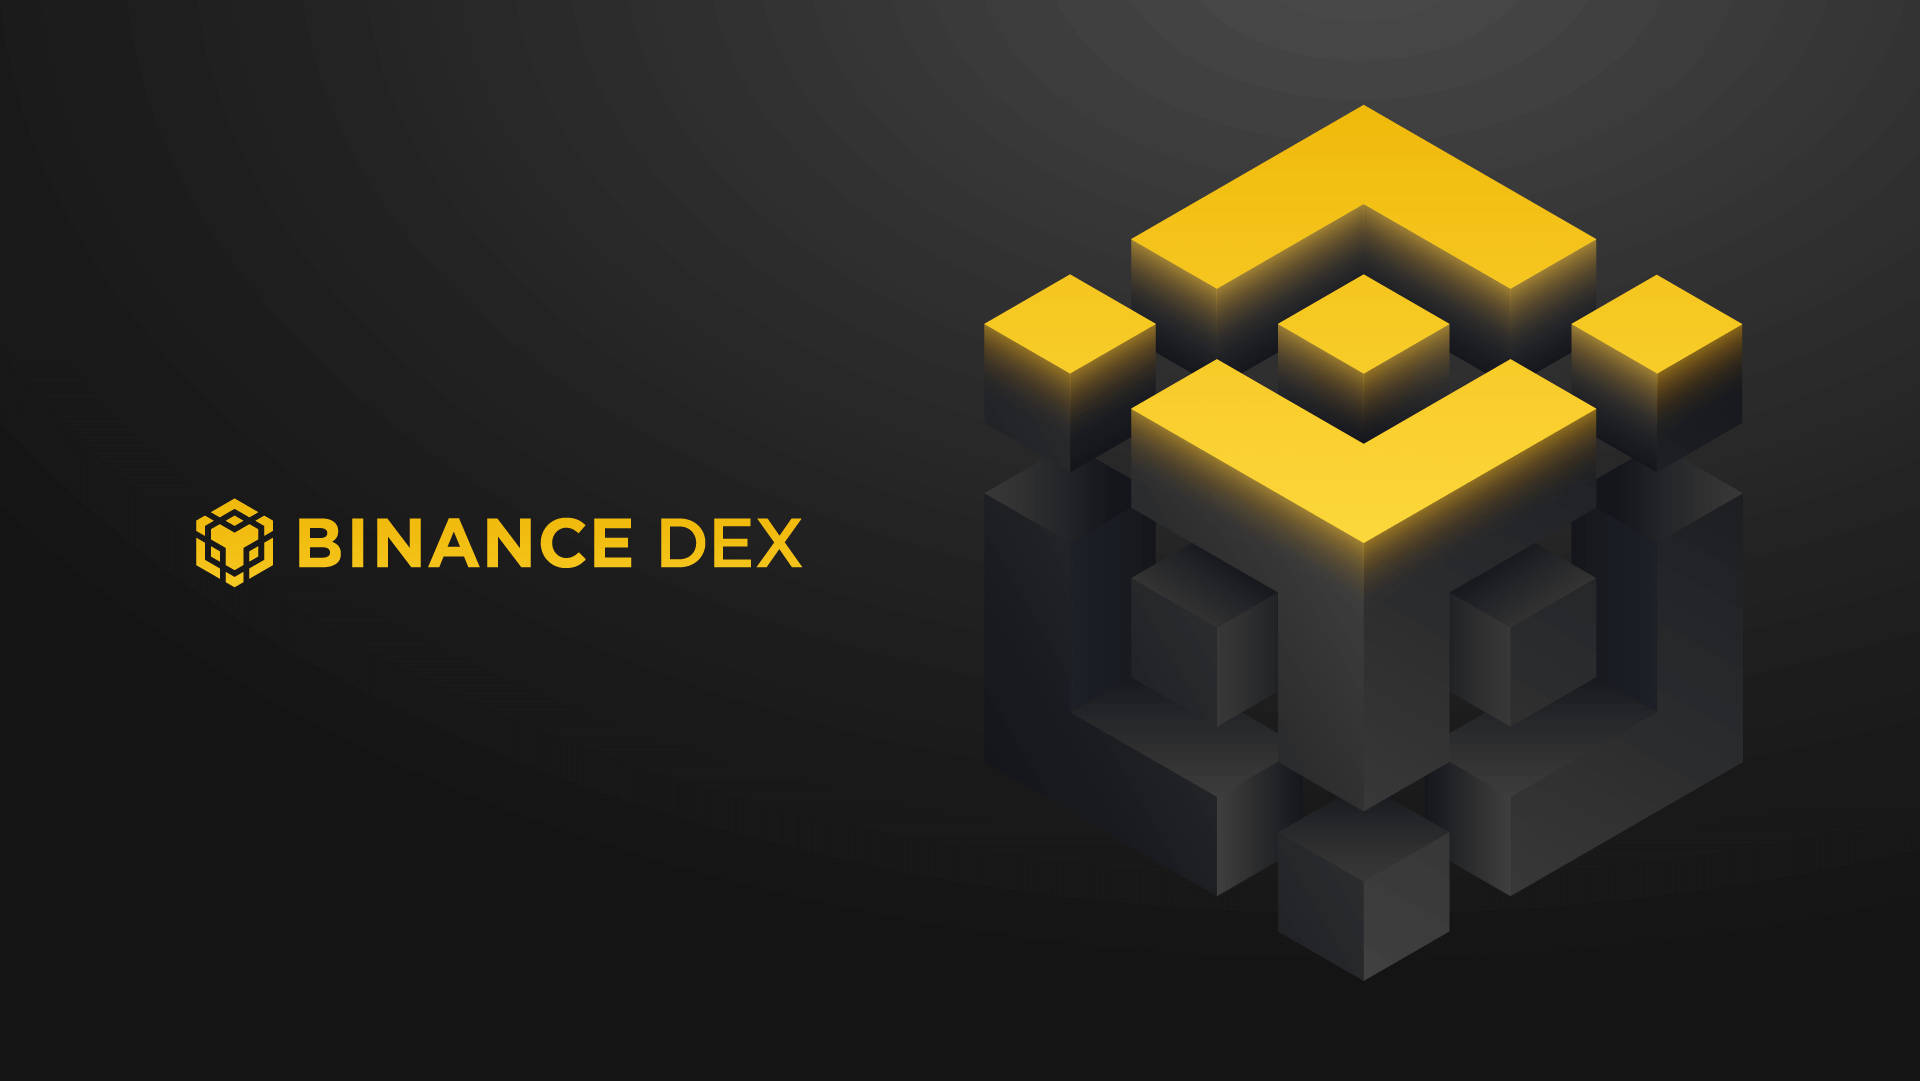 Binance Dex Cube